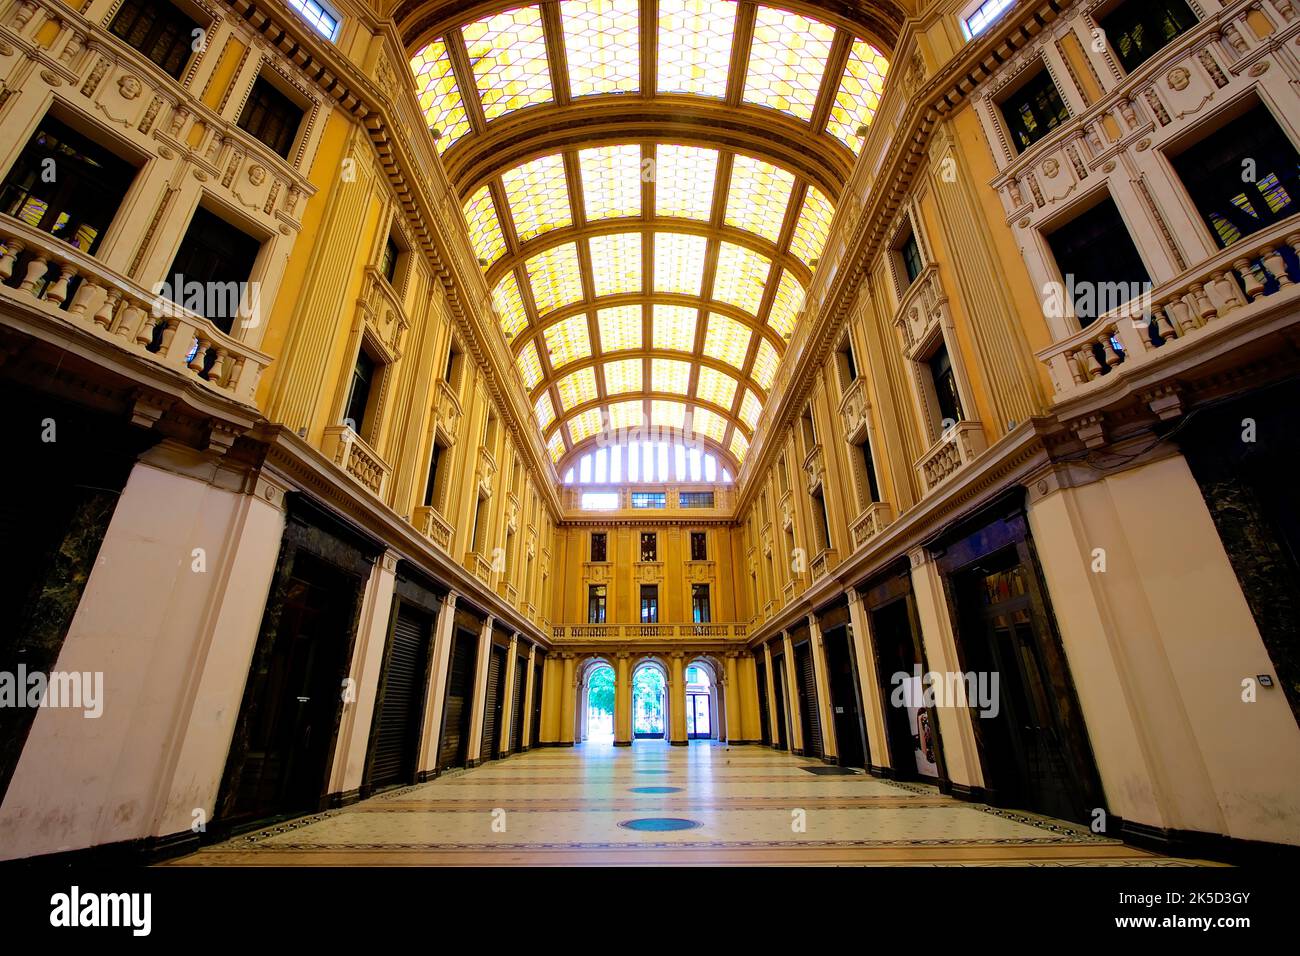 Italy, Sicily, Messina, Galleria Vittorio Emanuele, historical building, interior, liberty style, super wide angle, Stock Photo